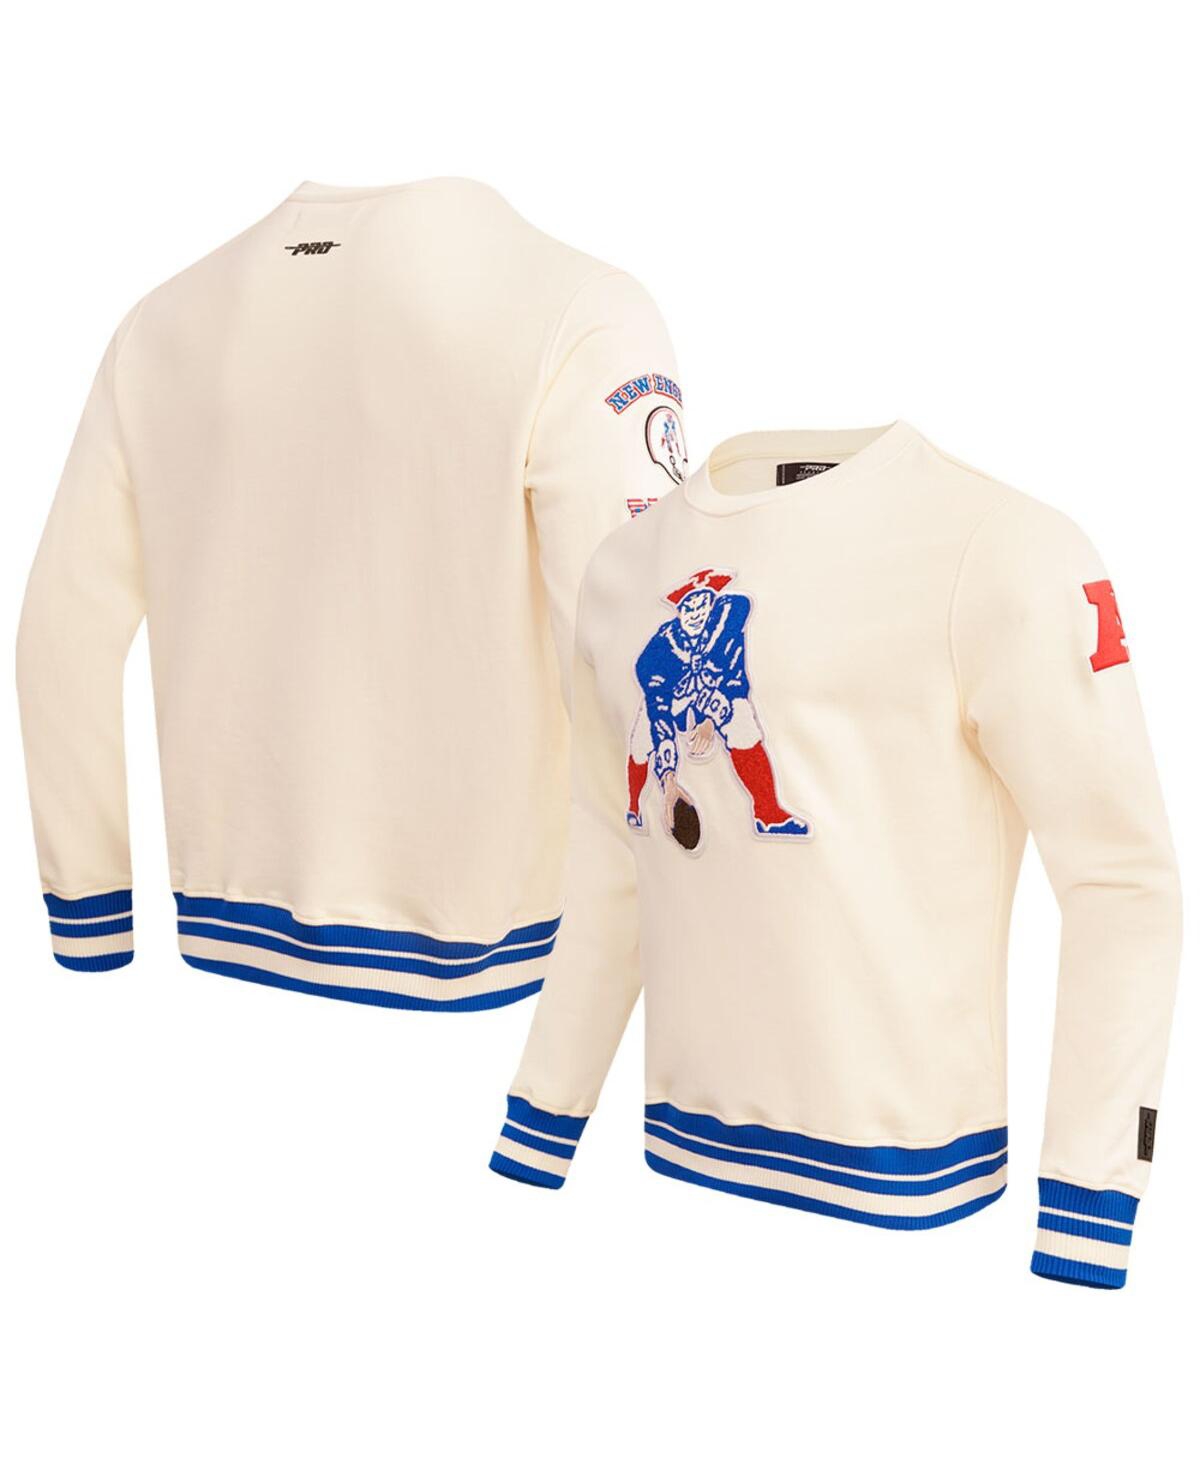 Men's Pro Standard Cream New England Patriots Retro Classics Fleece Pullover Sweatshirt - Cream